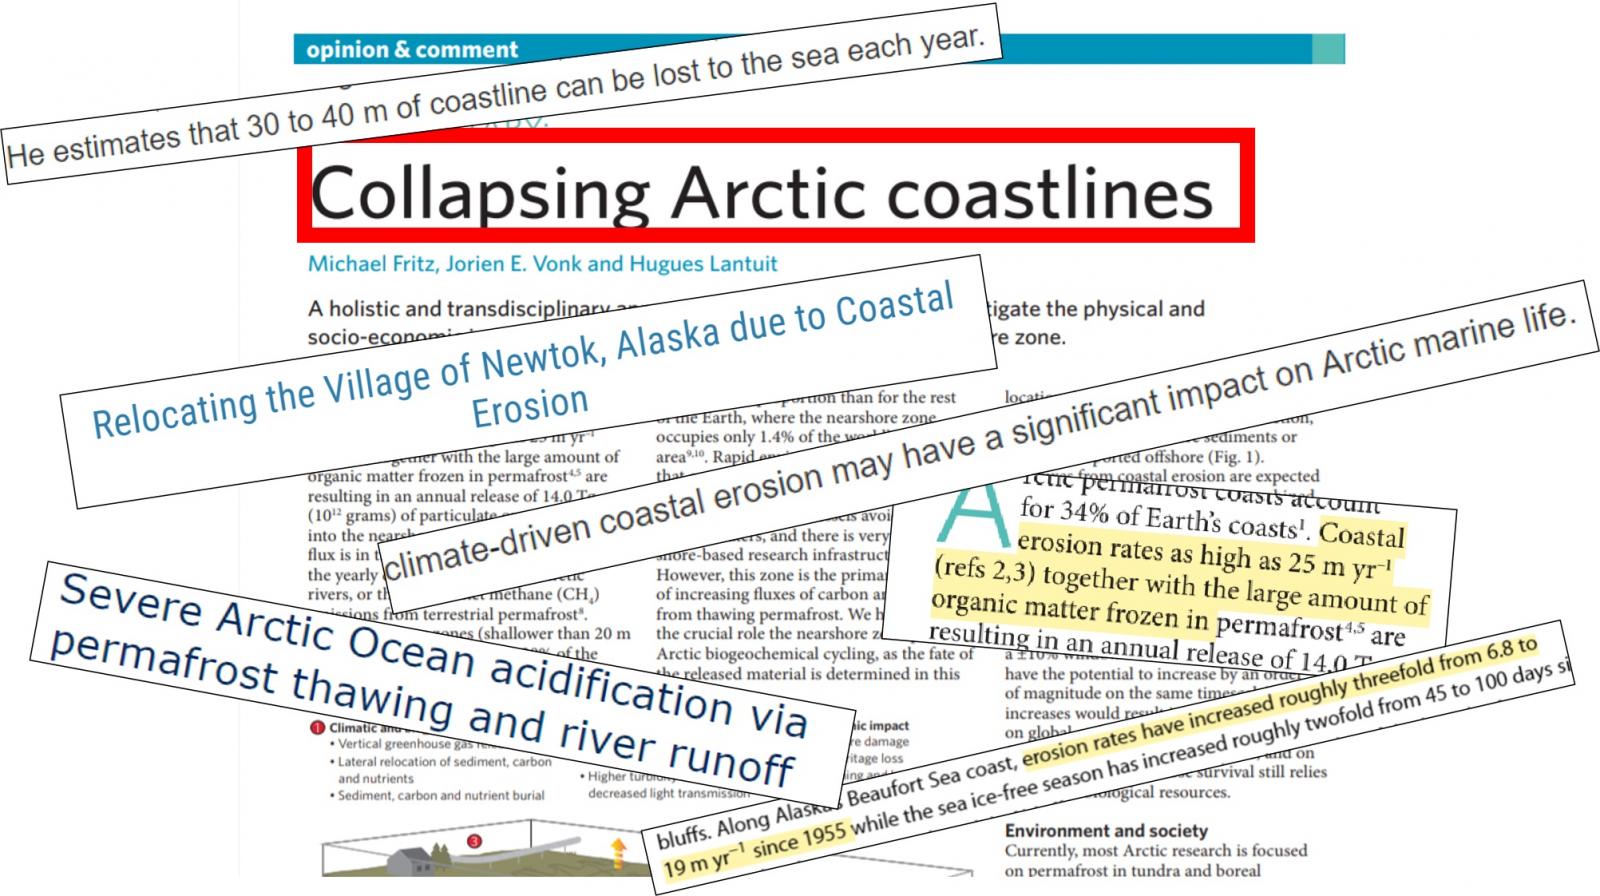 Dramatic headlines about collapsing Arctic Ice coastlines